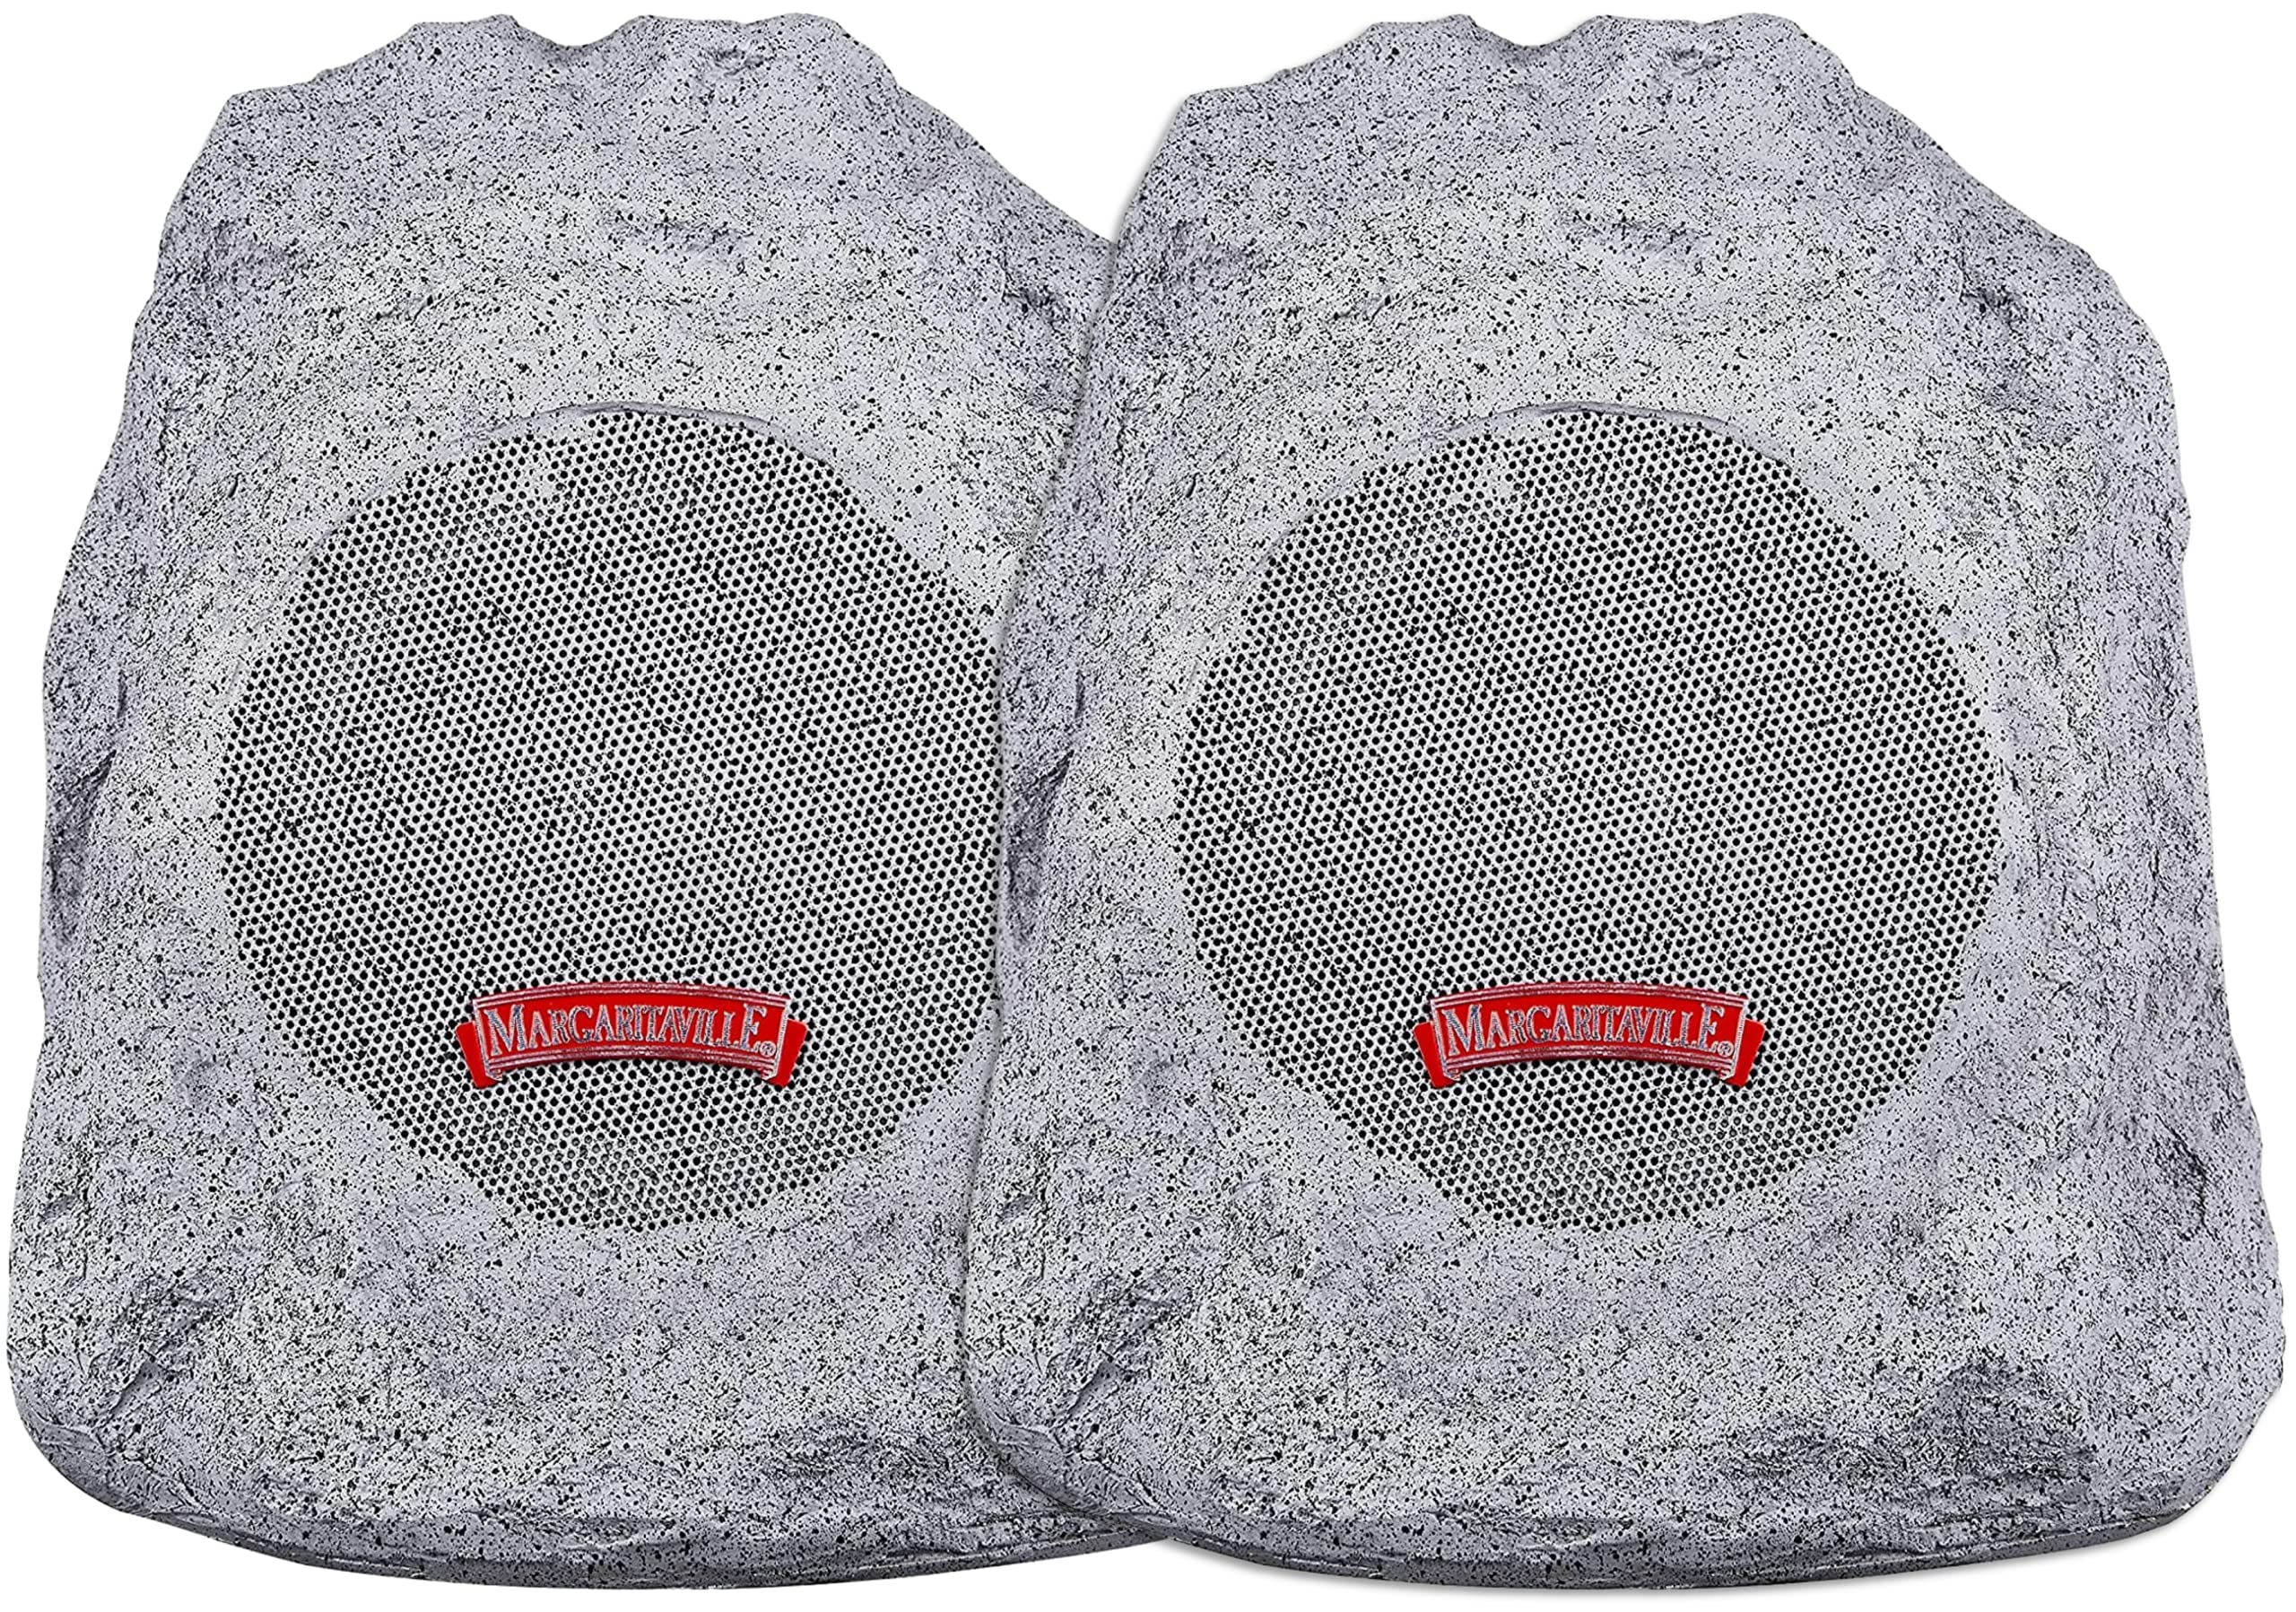 2-Piece Sakar Margaritaville “On The Rock” Outdoor Bluetooth Wireless Waterproof Speakers (Granite Grey) $86 + Free Shipping